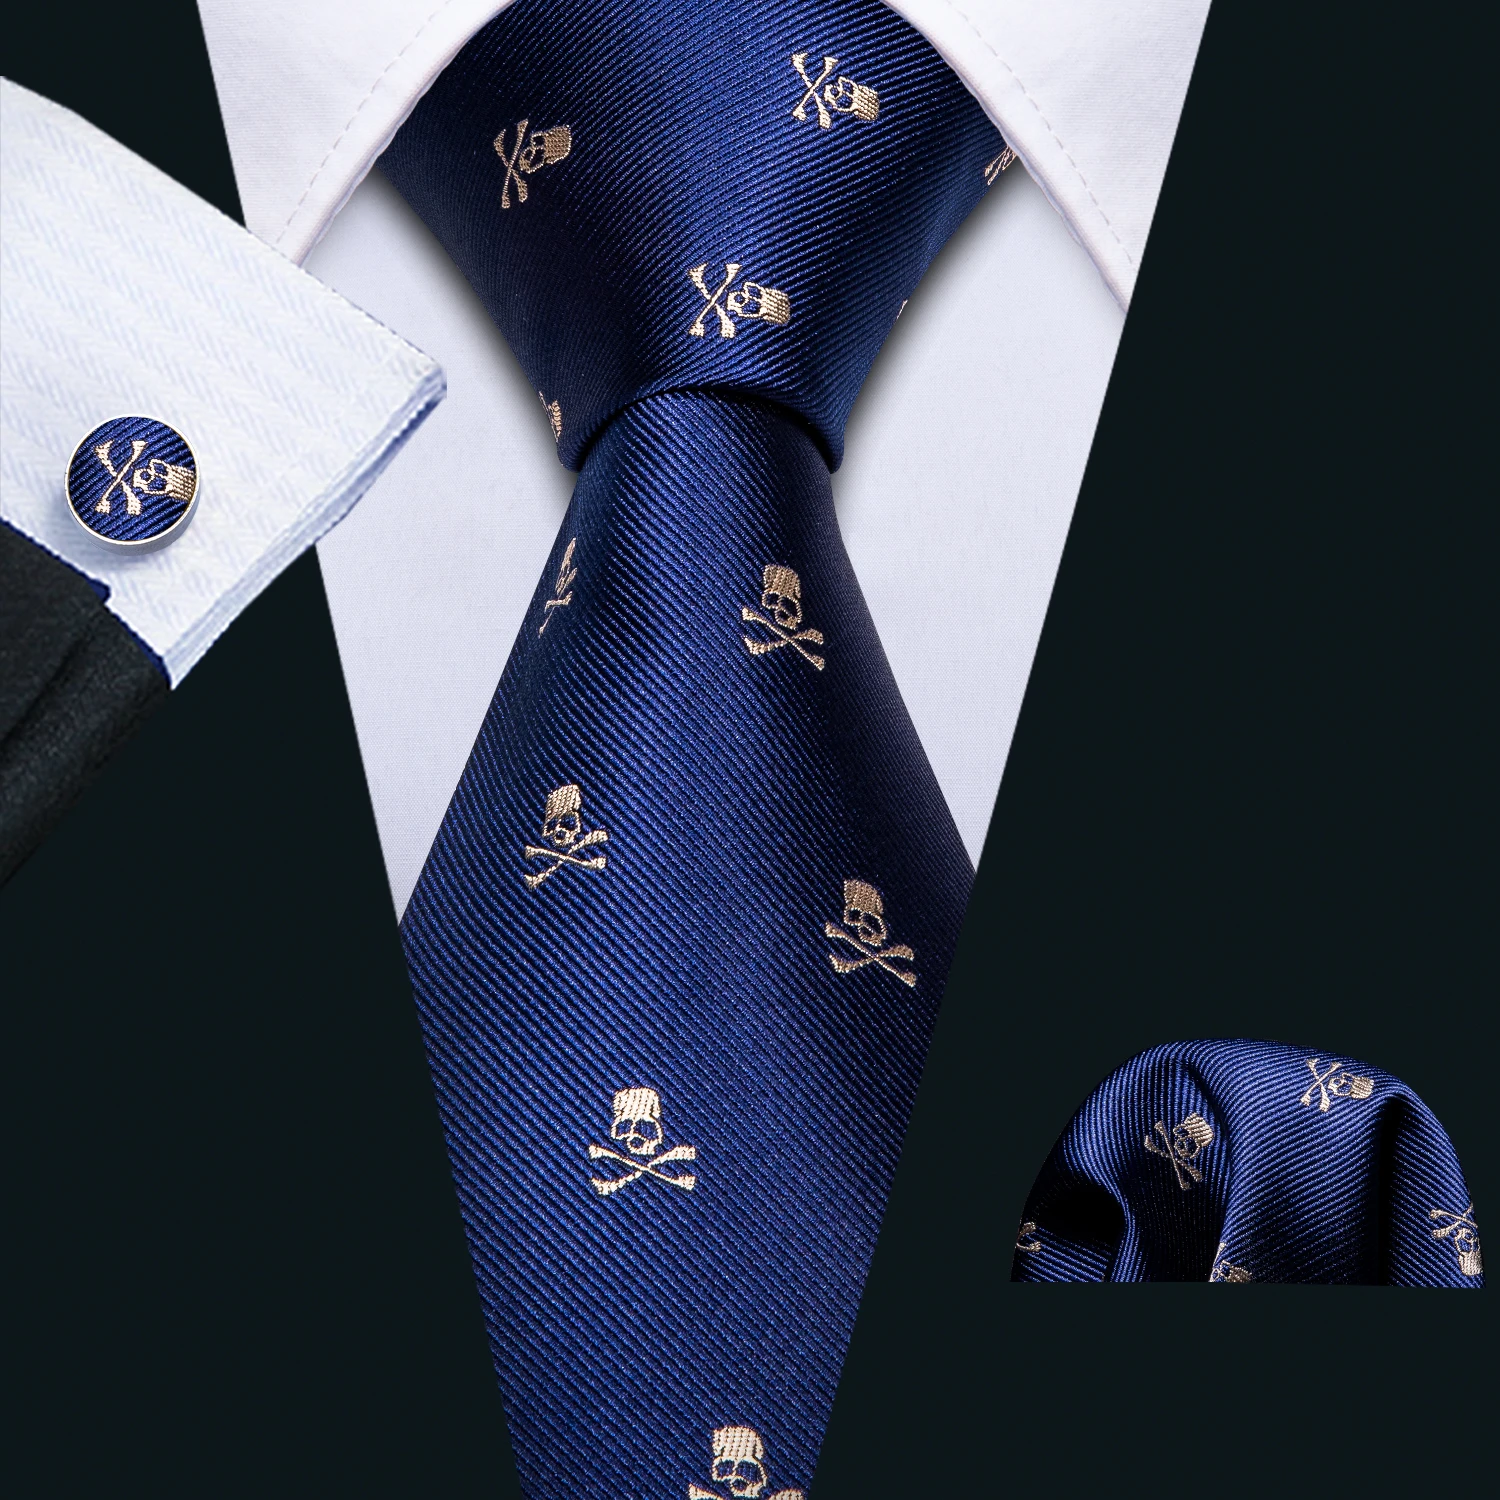 

Blue Skull Fashion Men Tie Necktie Gravat Handkerchief Cufflinks Set Silk Ties For Men Suit Party Business Gift Barry.Wang